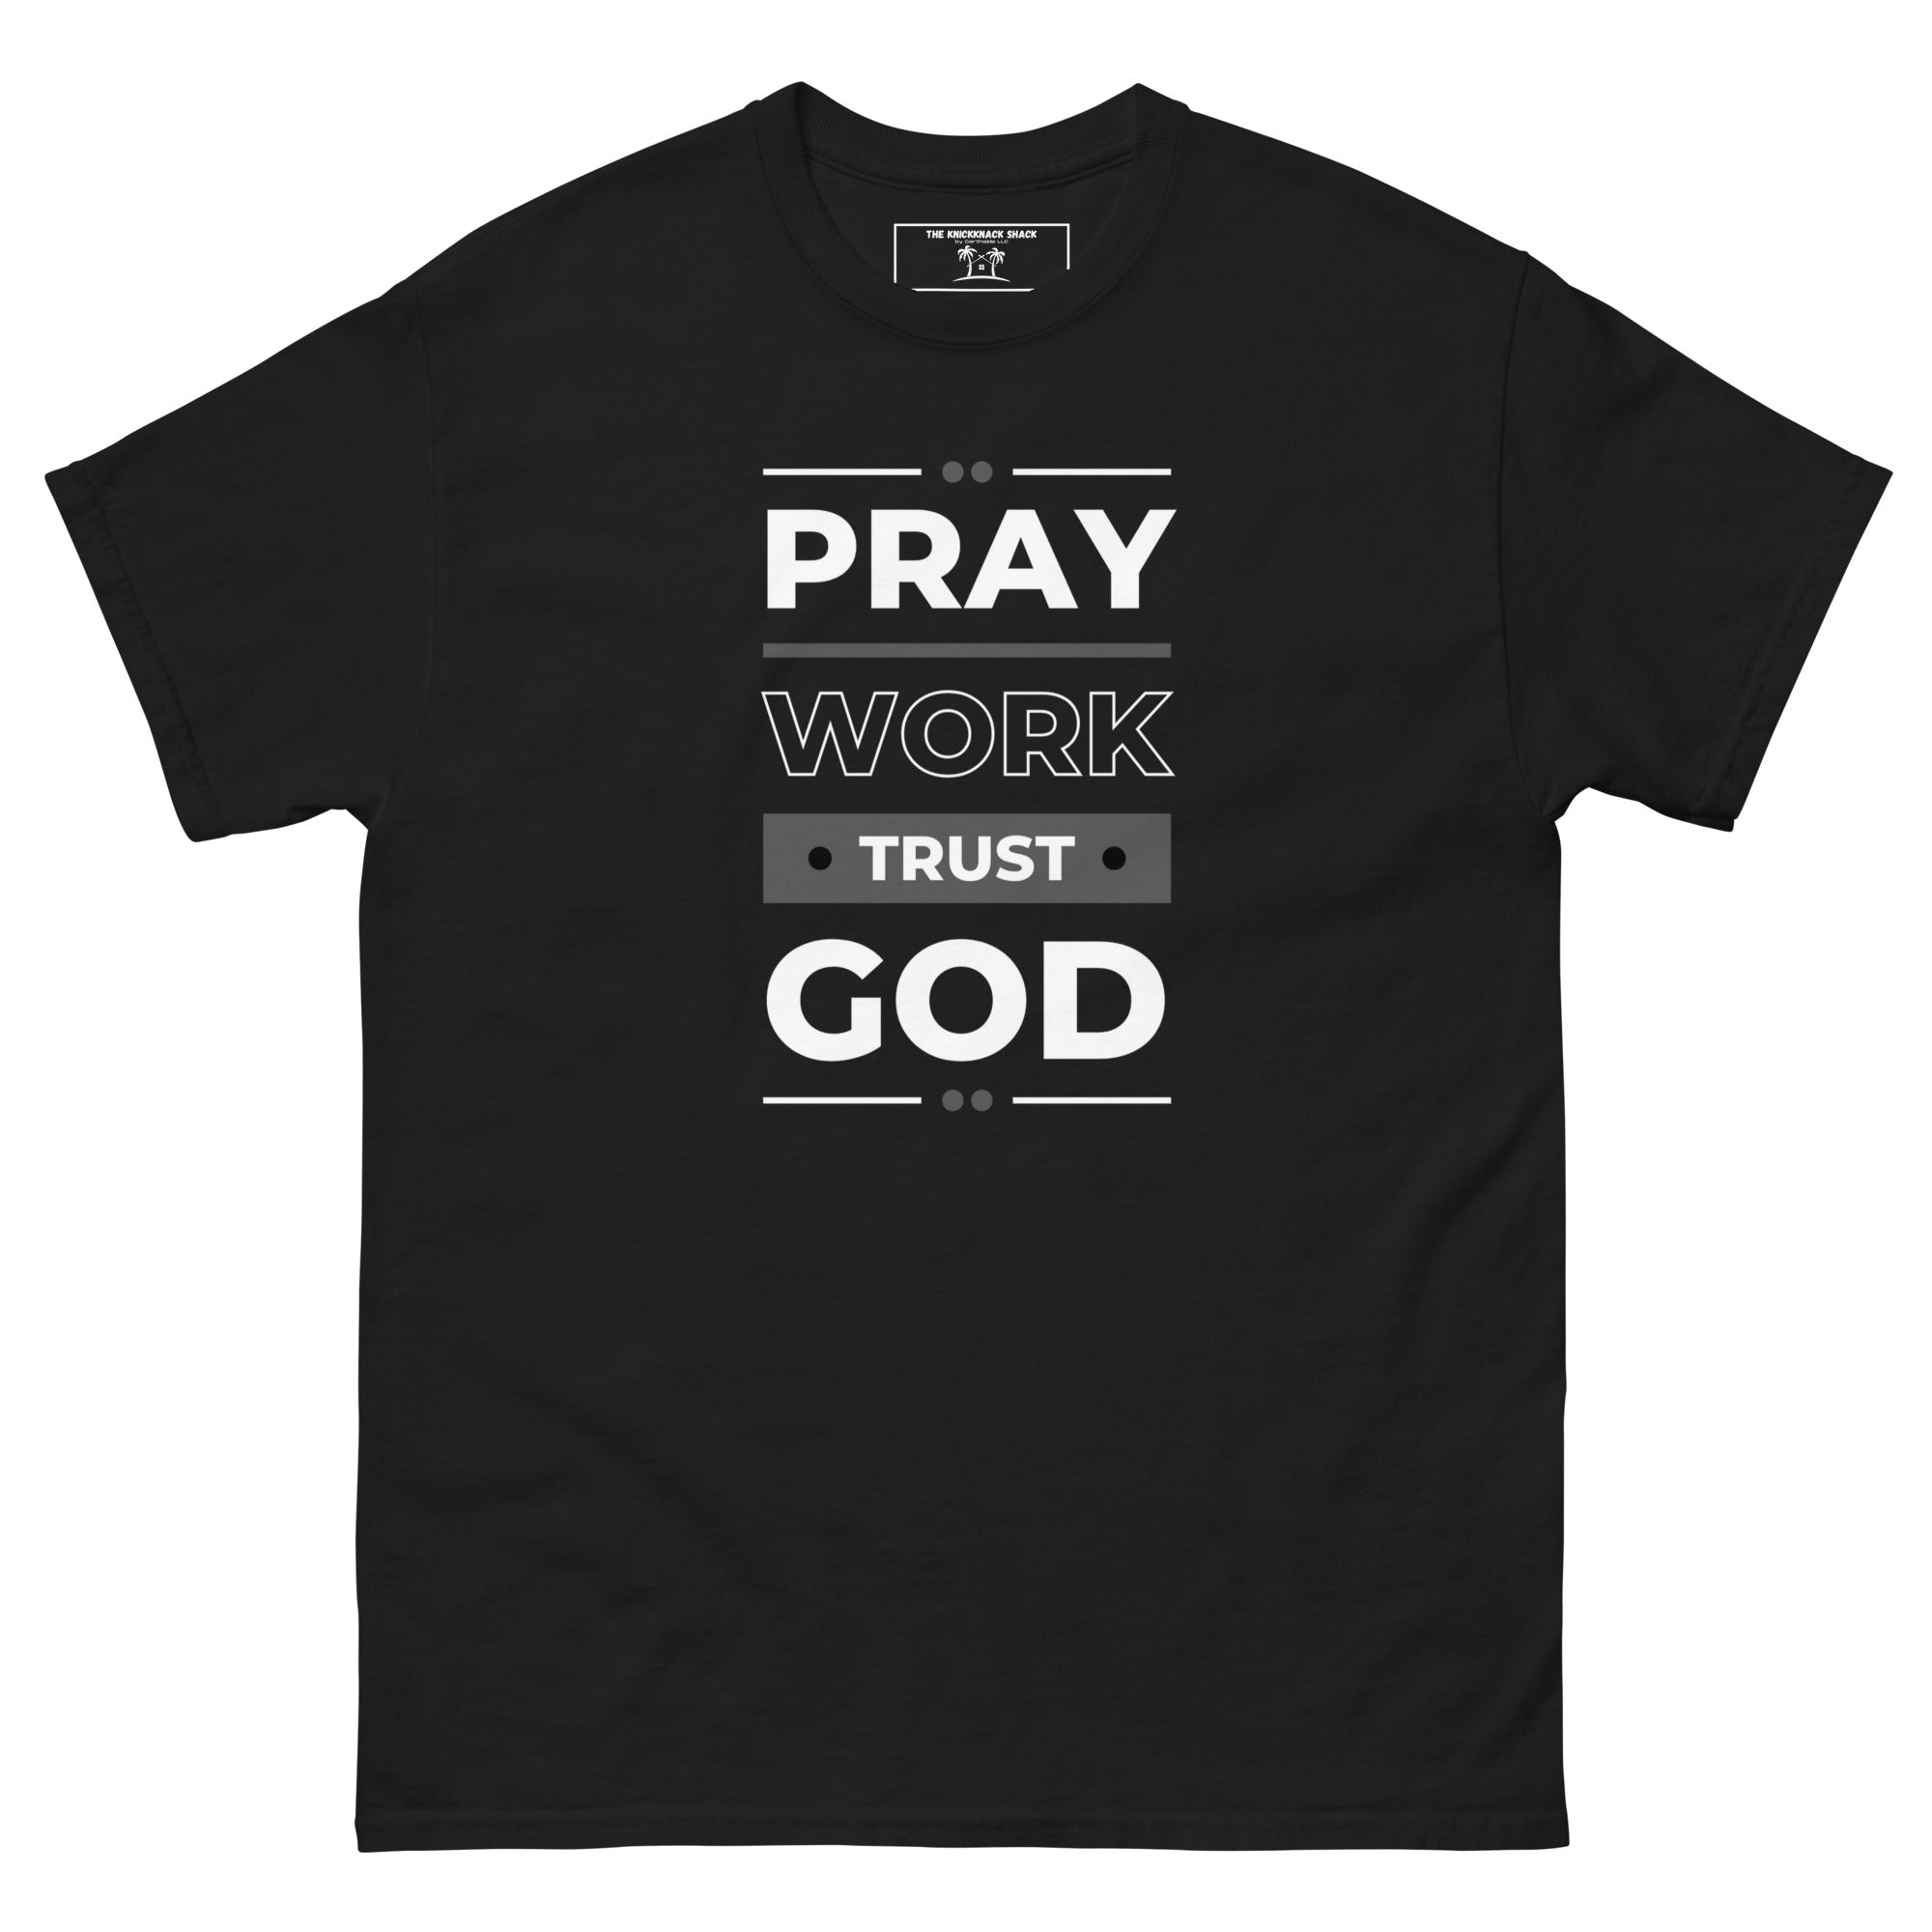 Camiseta clásica: ora, trabaja, confía en Dios (colores oscuros)